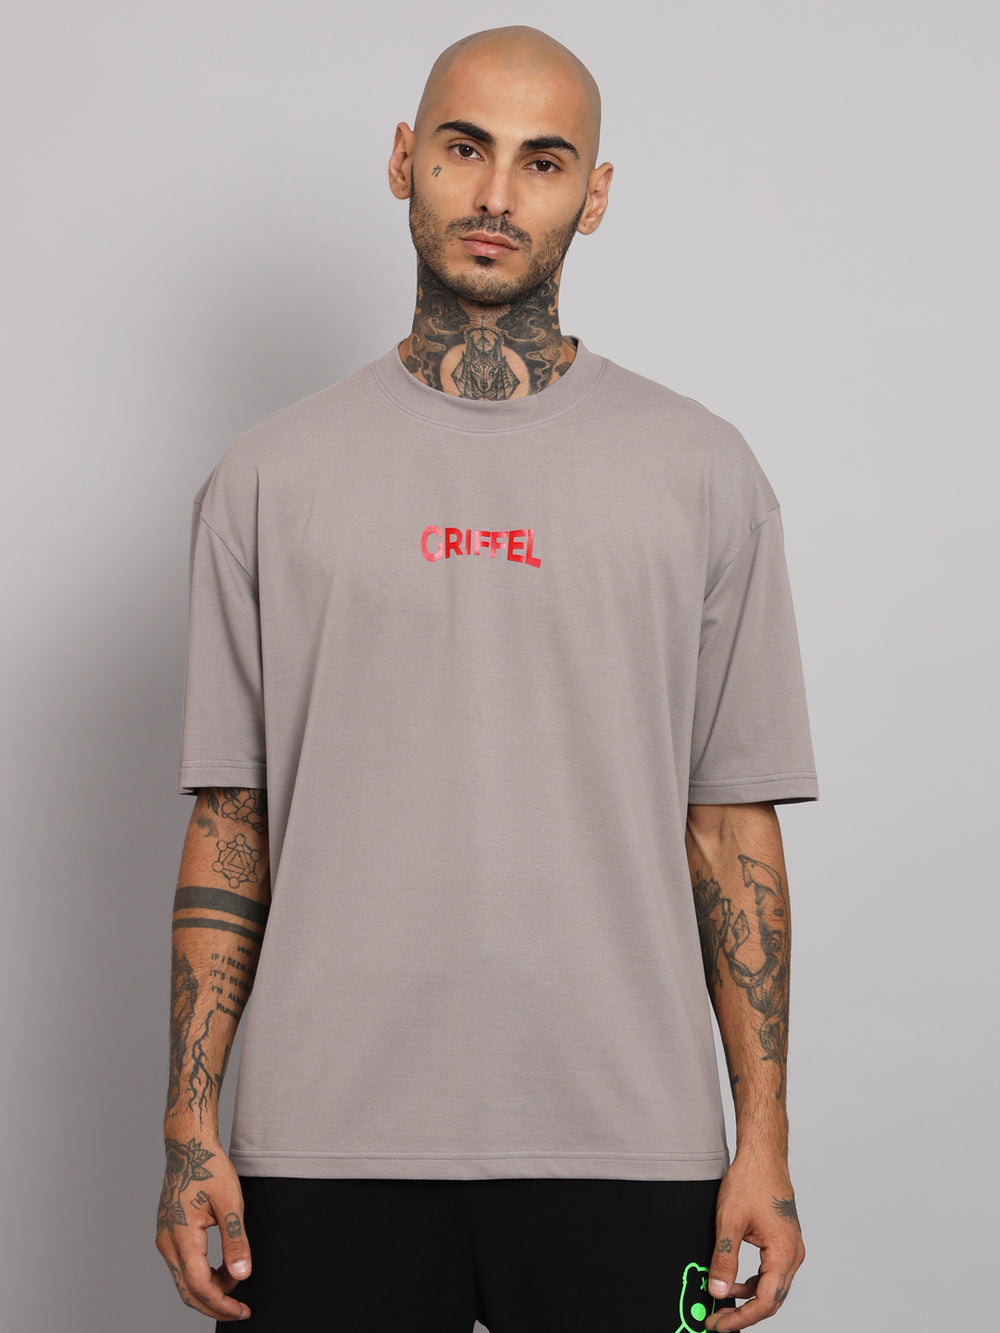 GRIFFEL Men REFLECTIVE SNAKE Printed Steel Grey Loosefit Cotton T-shirt - griffel